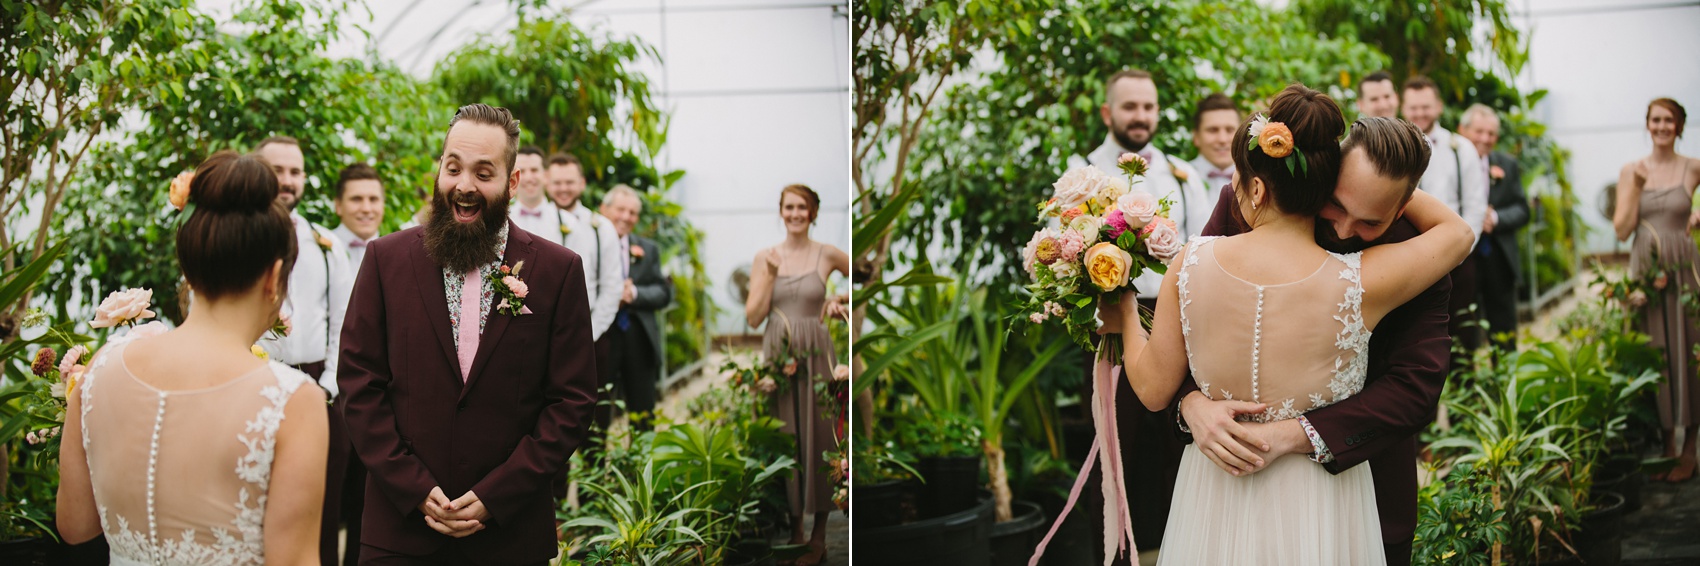 15 Watters dress vibrant colourful secret garden wedding